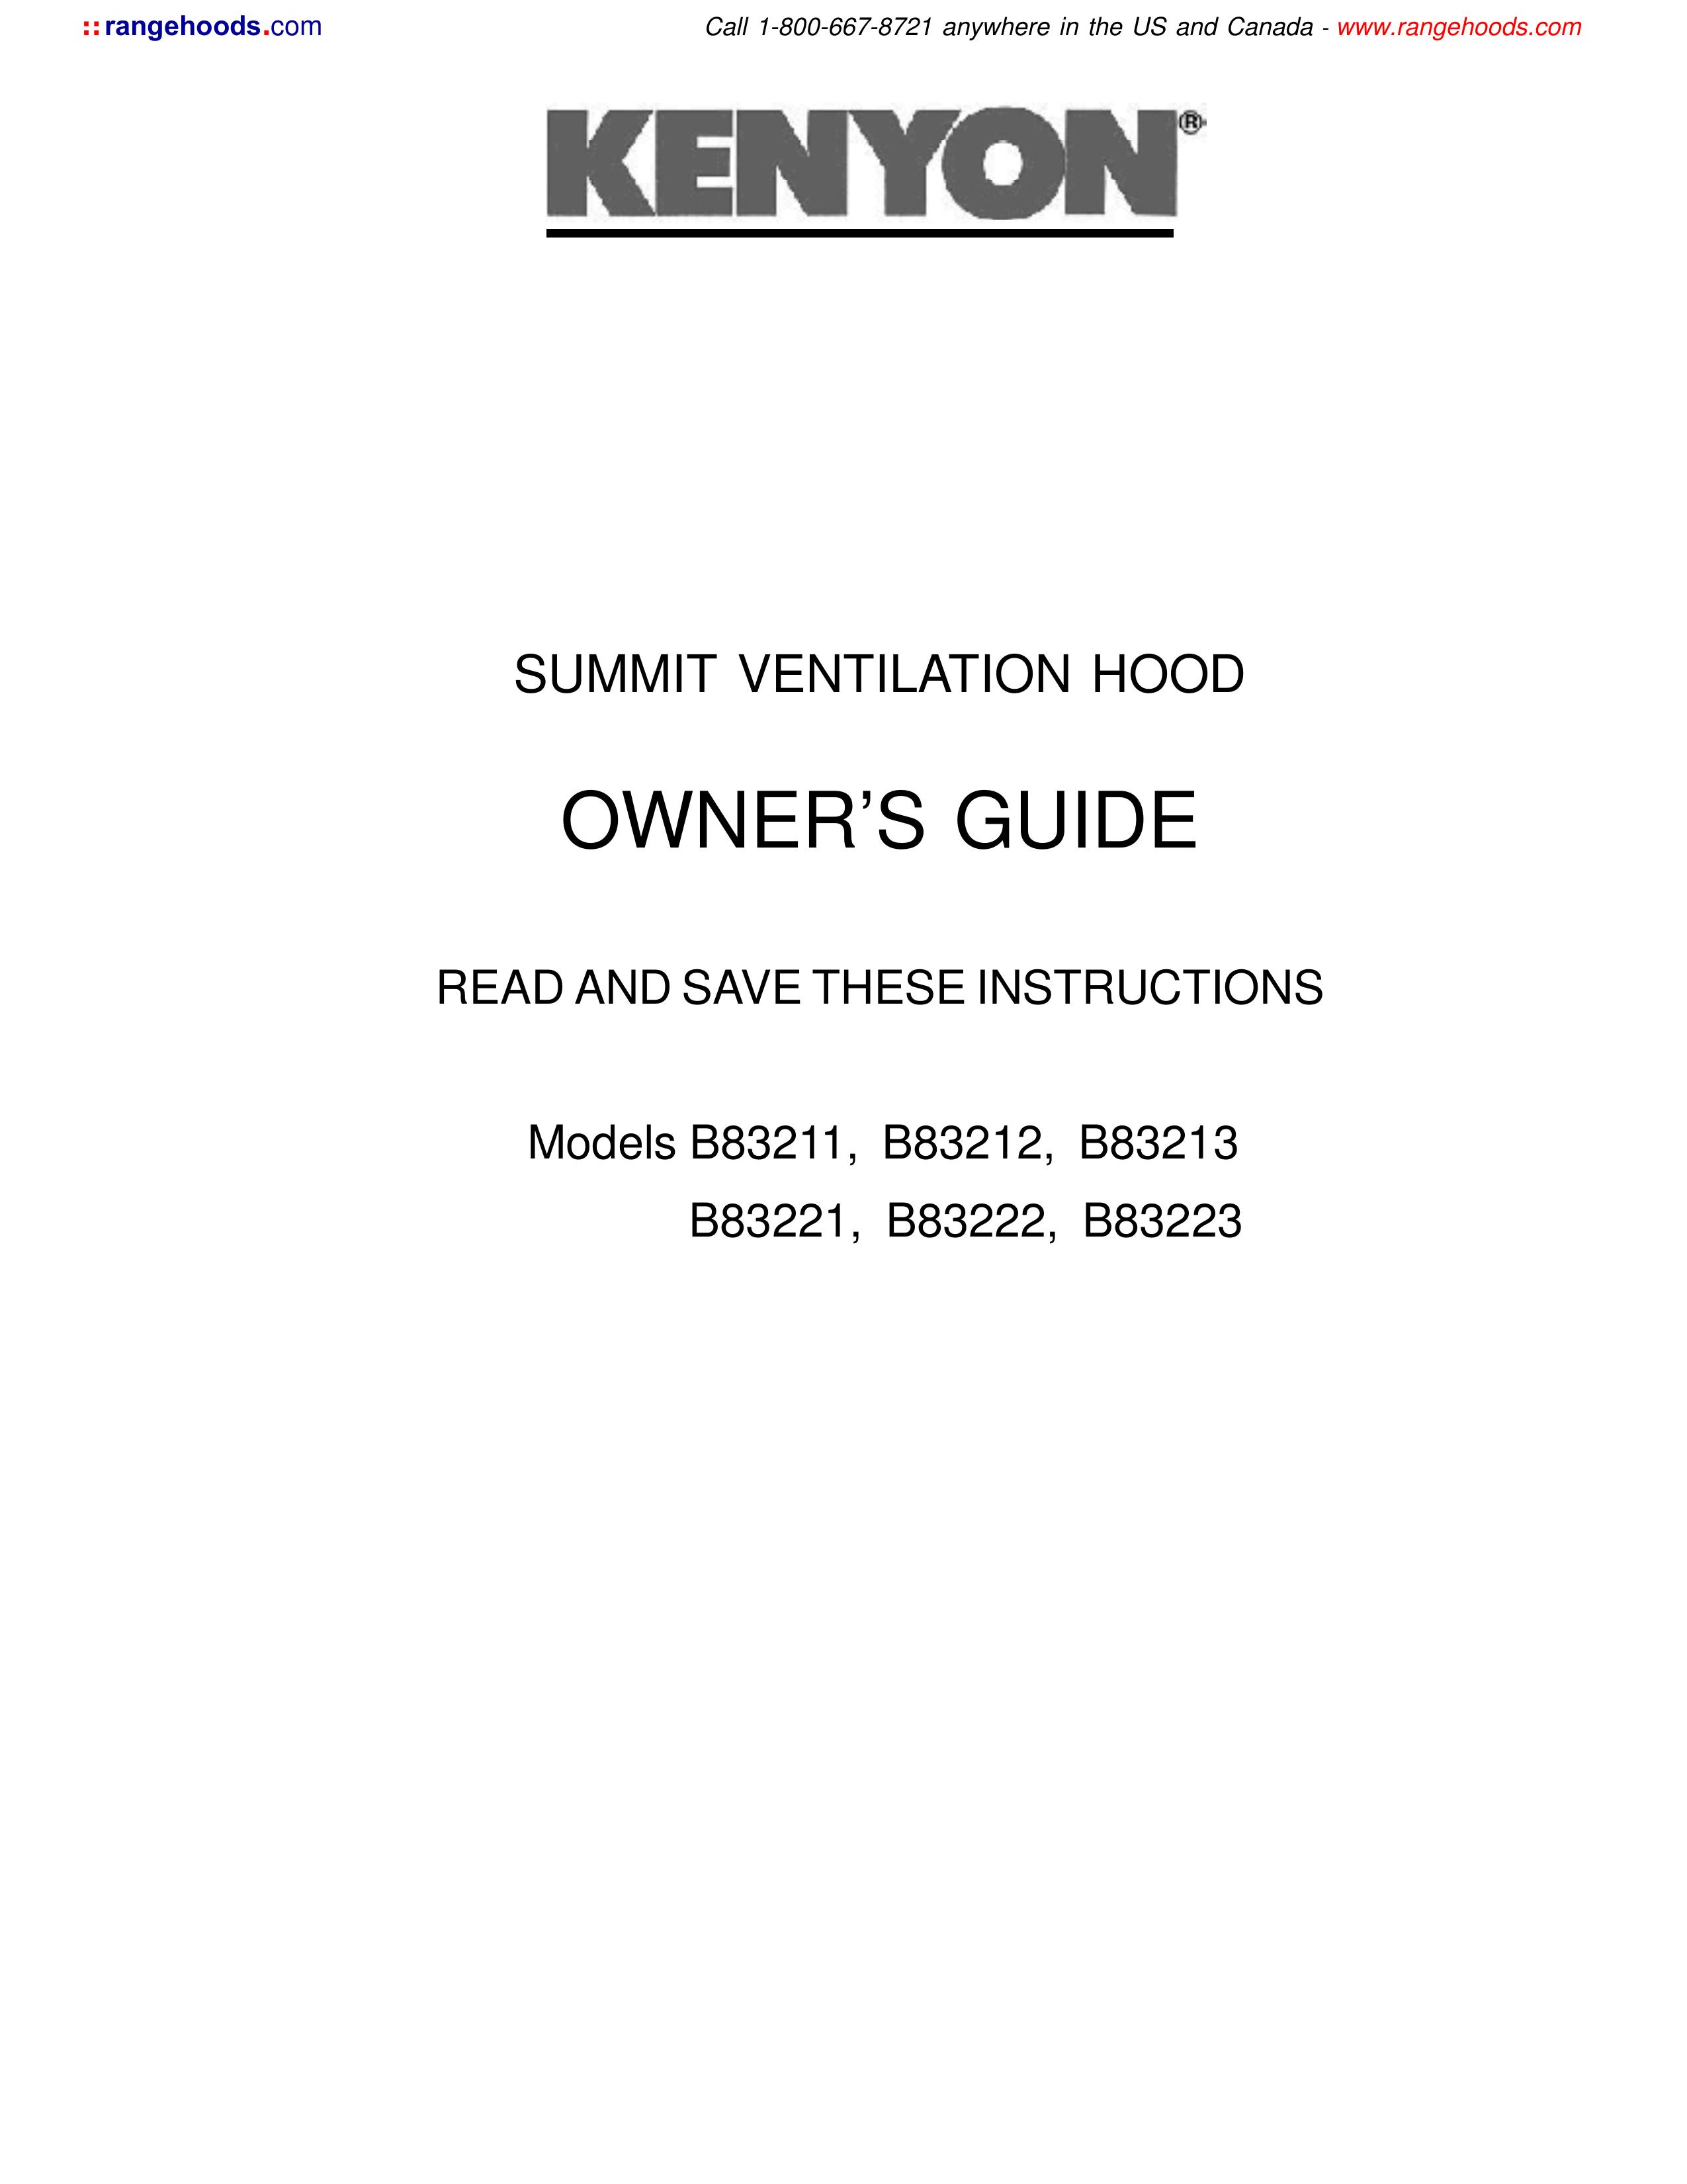 Kenyon B83223 Ventilation Hood User Manual